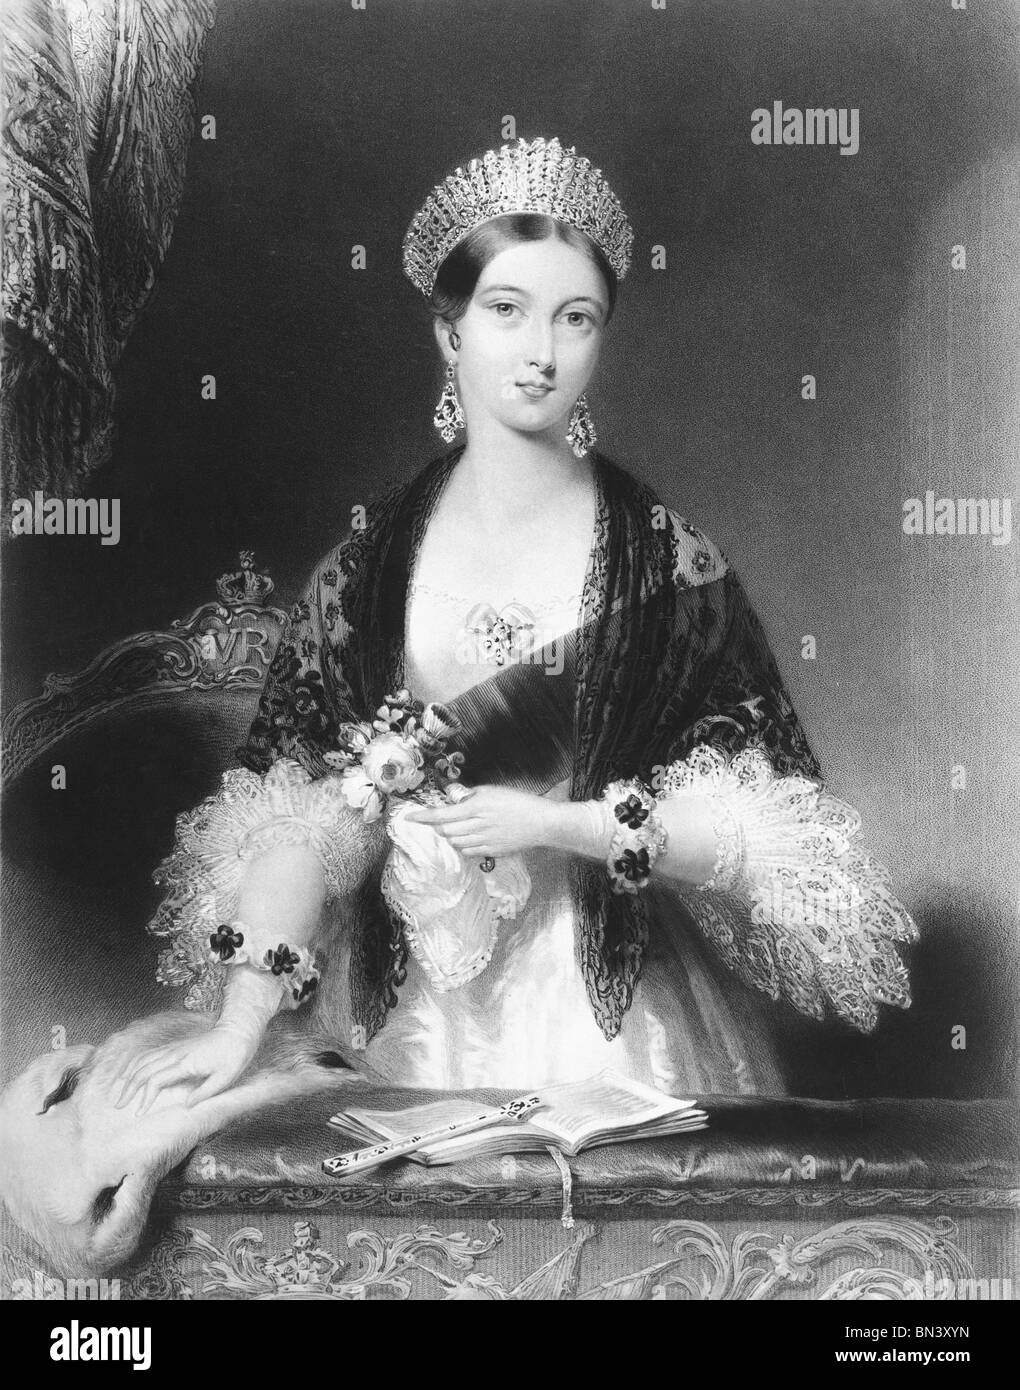 La reina Victoria en Drury Lane en su caja, por C.E.Wagstaff. Londres, Inglaterra, 1838 Foto de stock